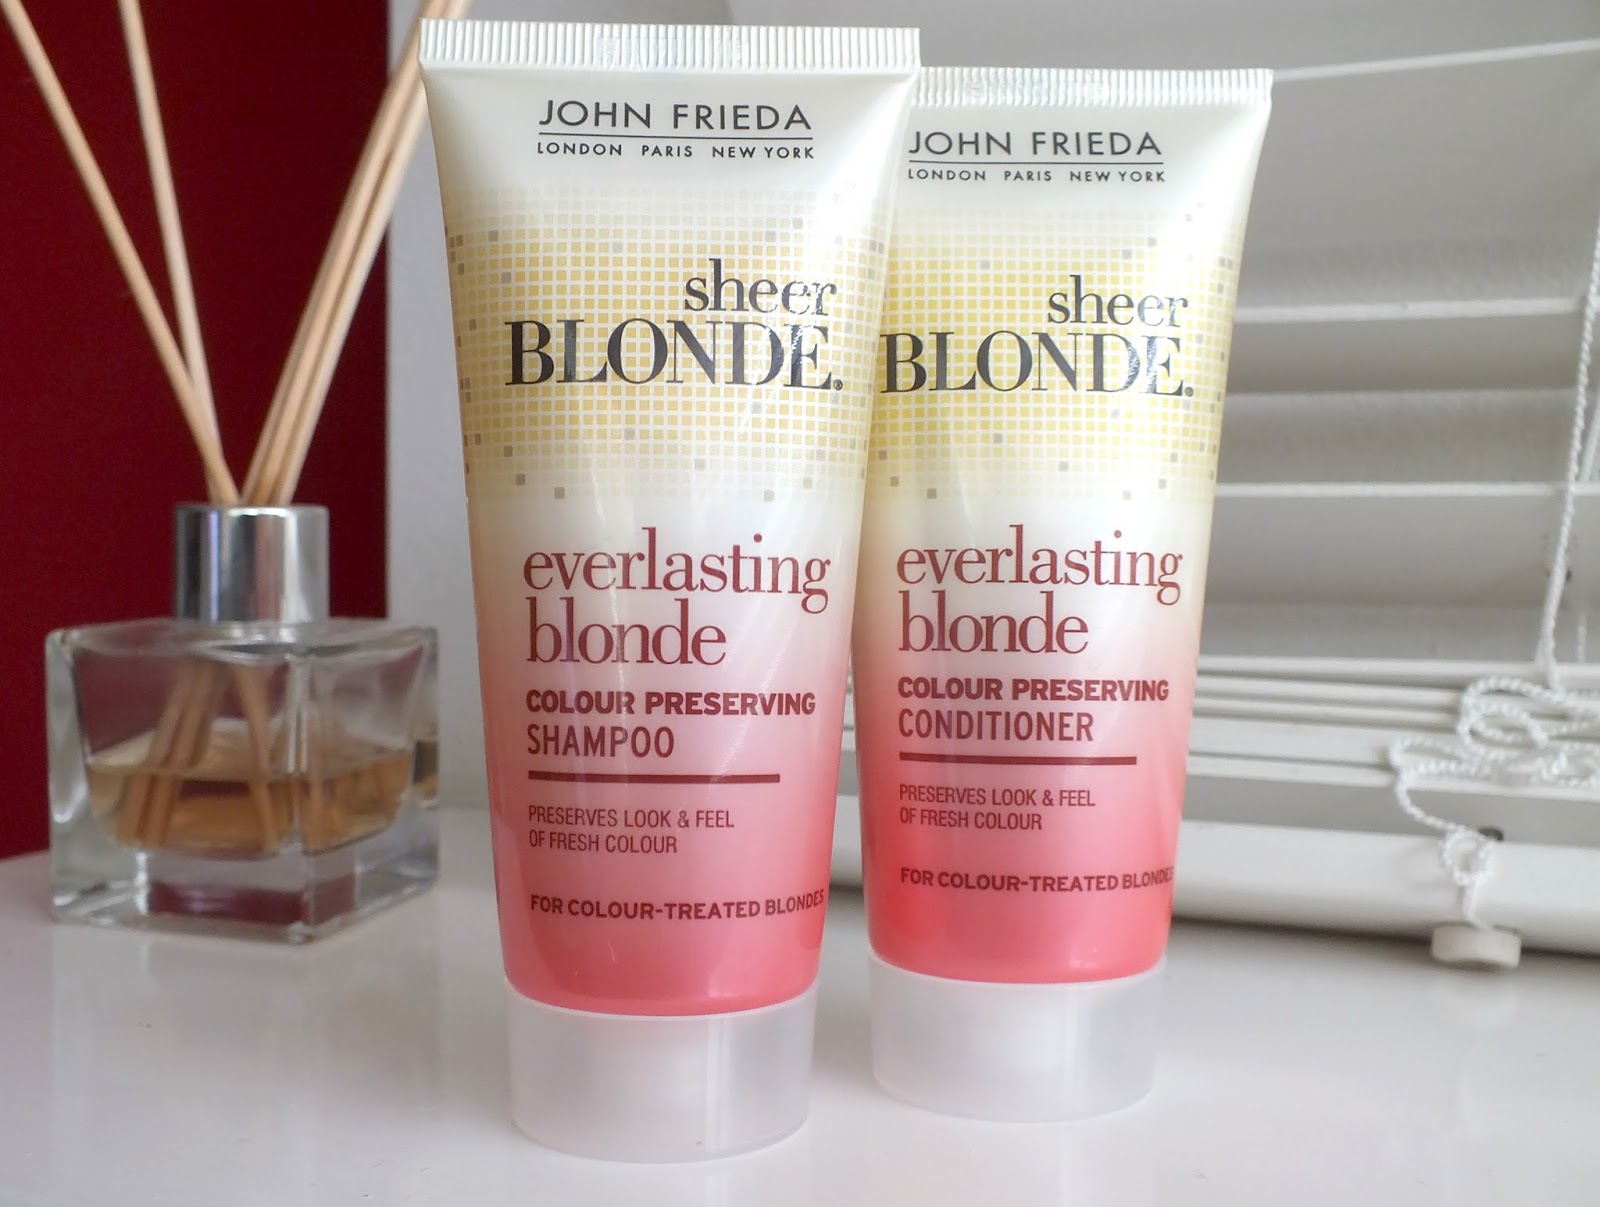 John Frieda Sheer Blonde Everlasting Blonde Color Preserving Shampoo